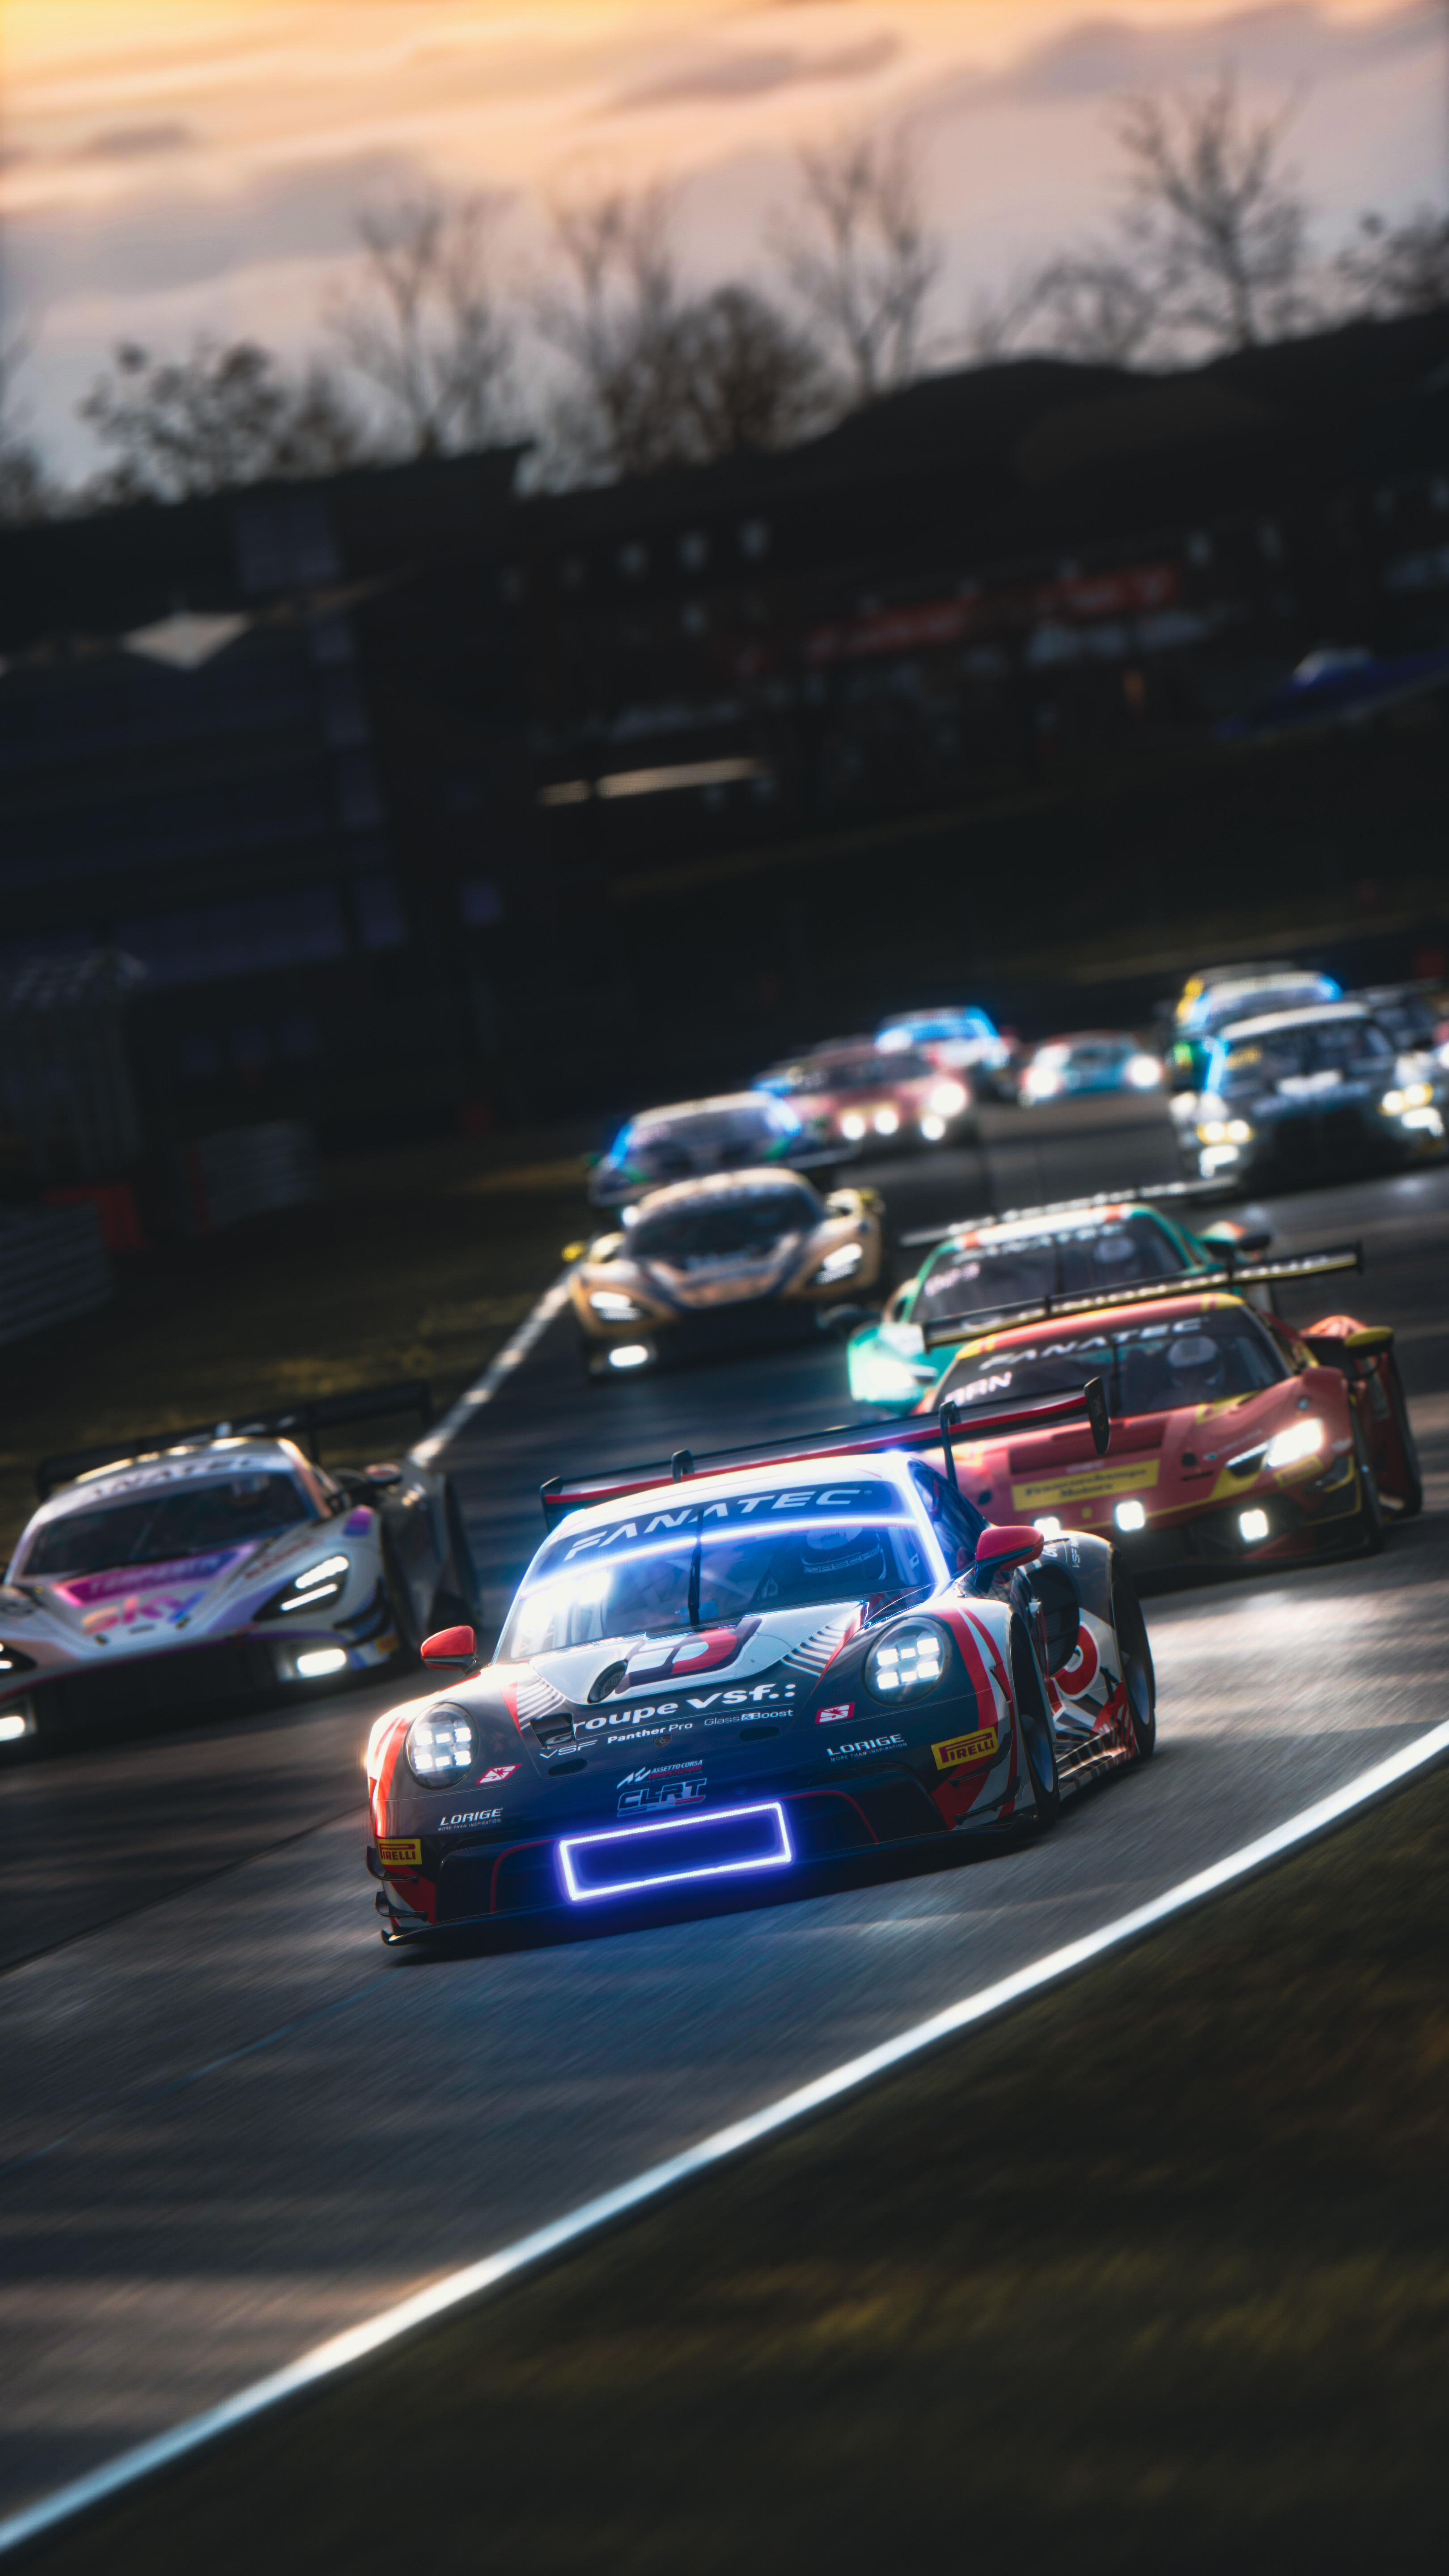 GT3 Racing Race Cars Car Assetto Corsa PC Gaming 3240x5760